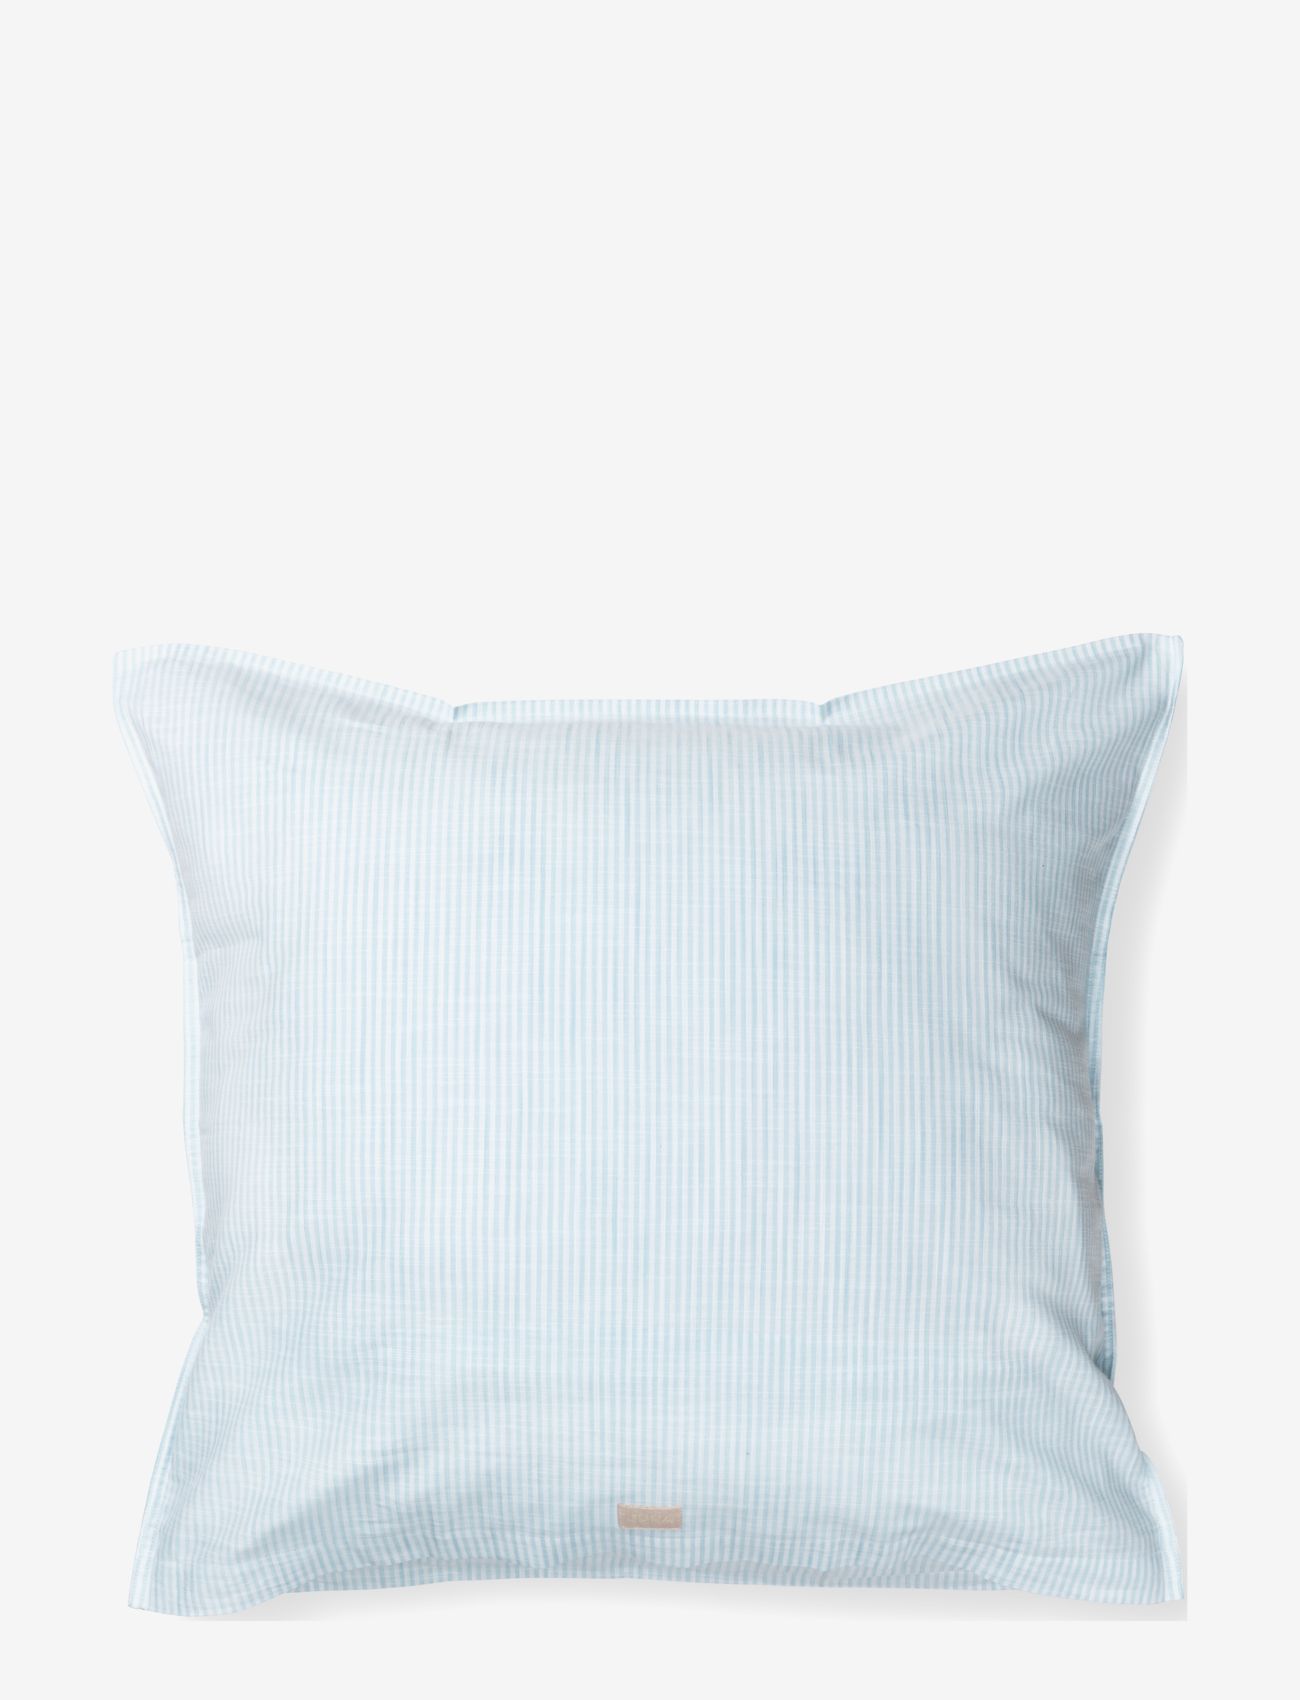 Juna - Monochrome Lines Bed linen 140x200 cm NO - bedsets - light blue/white - 1